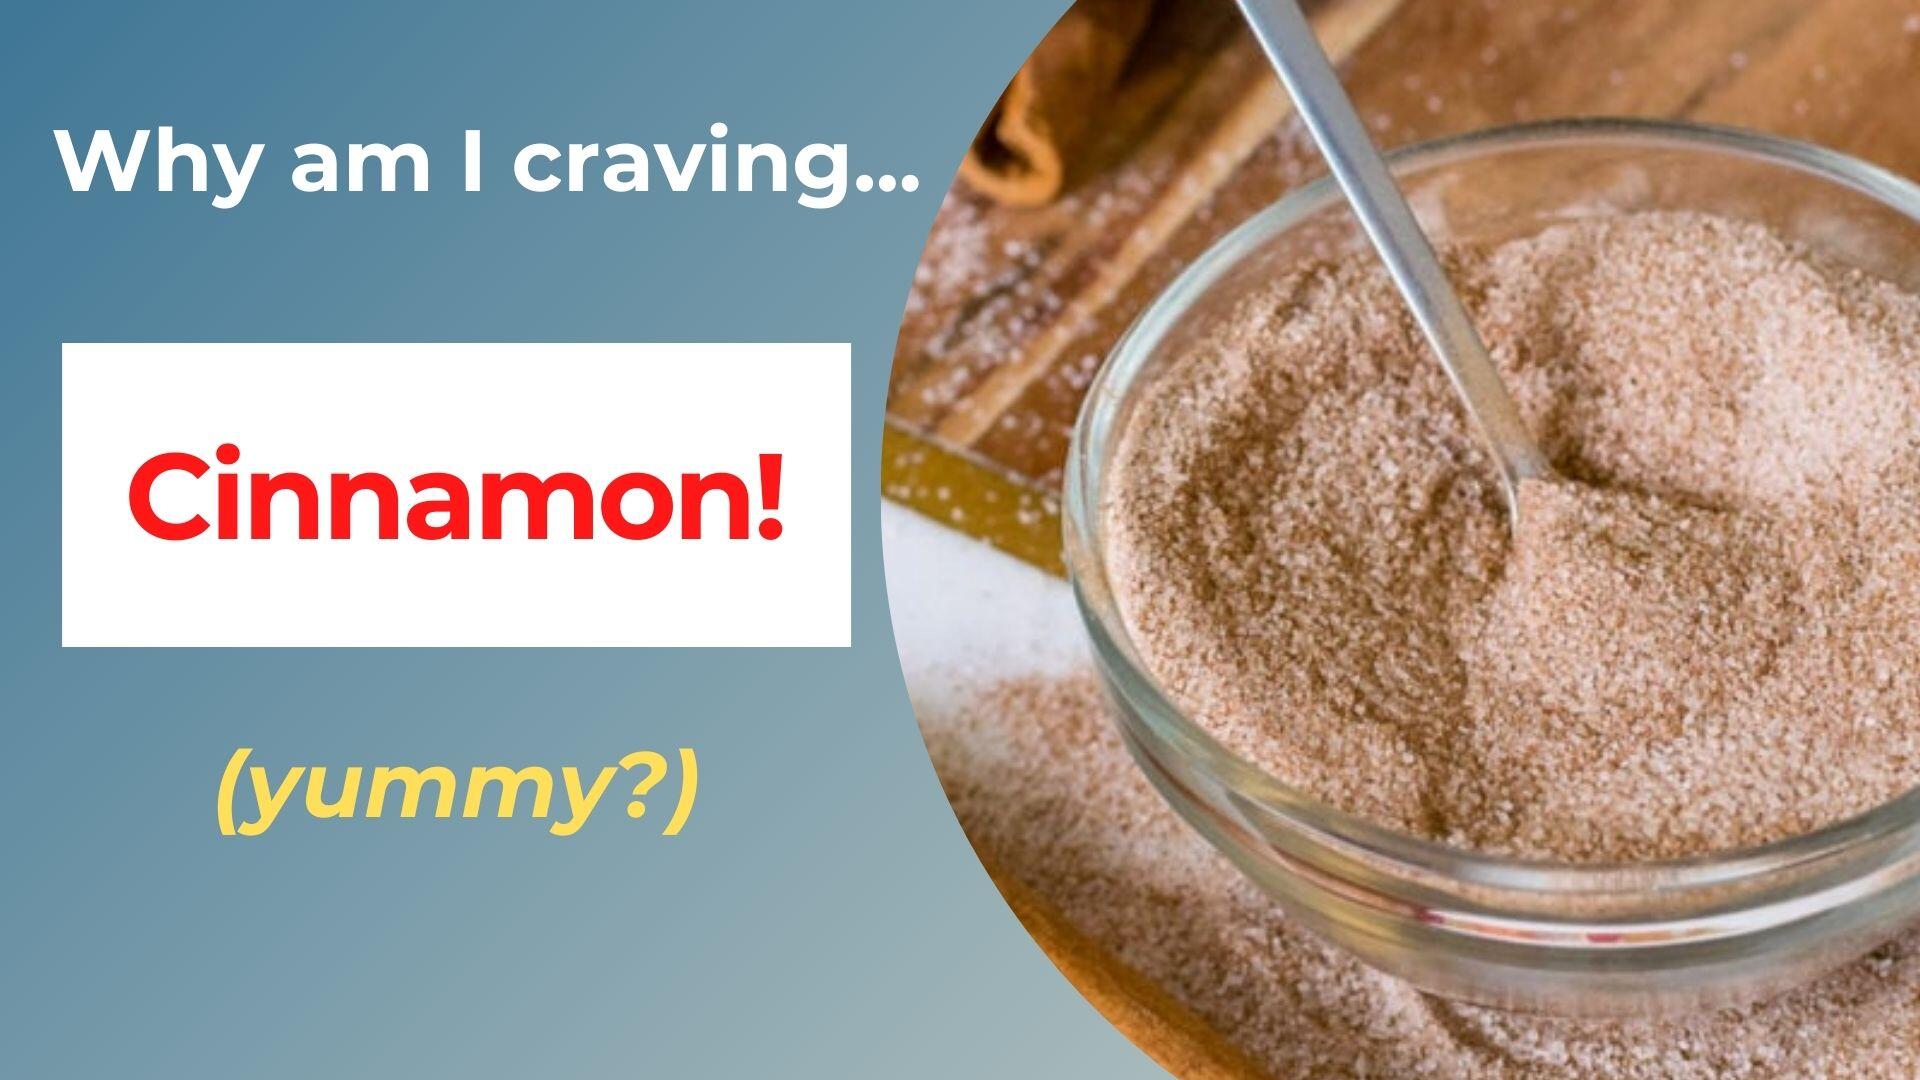 why am I craving cinnamon (1)